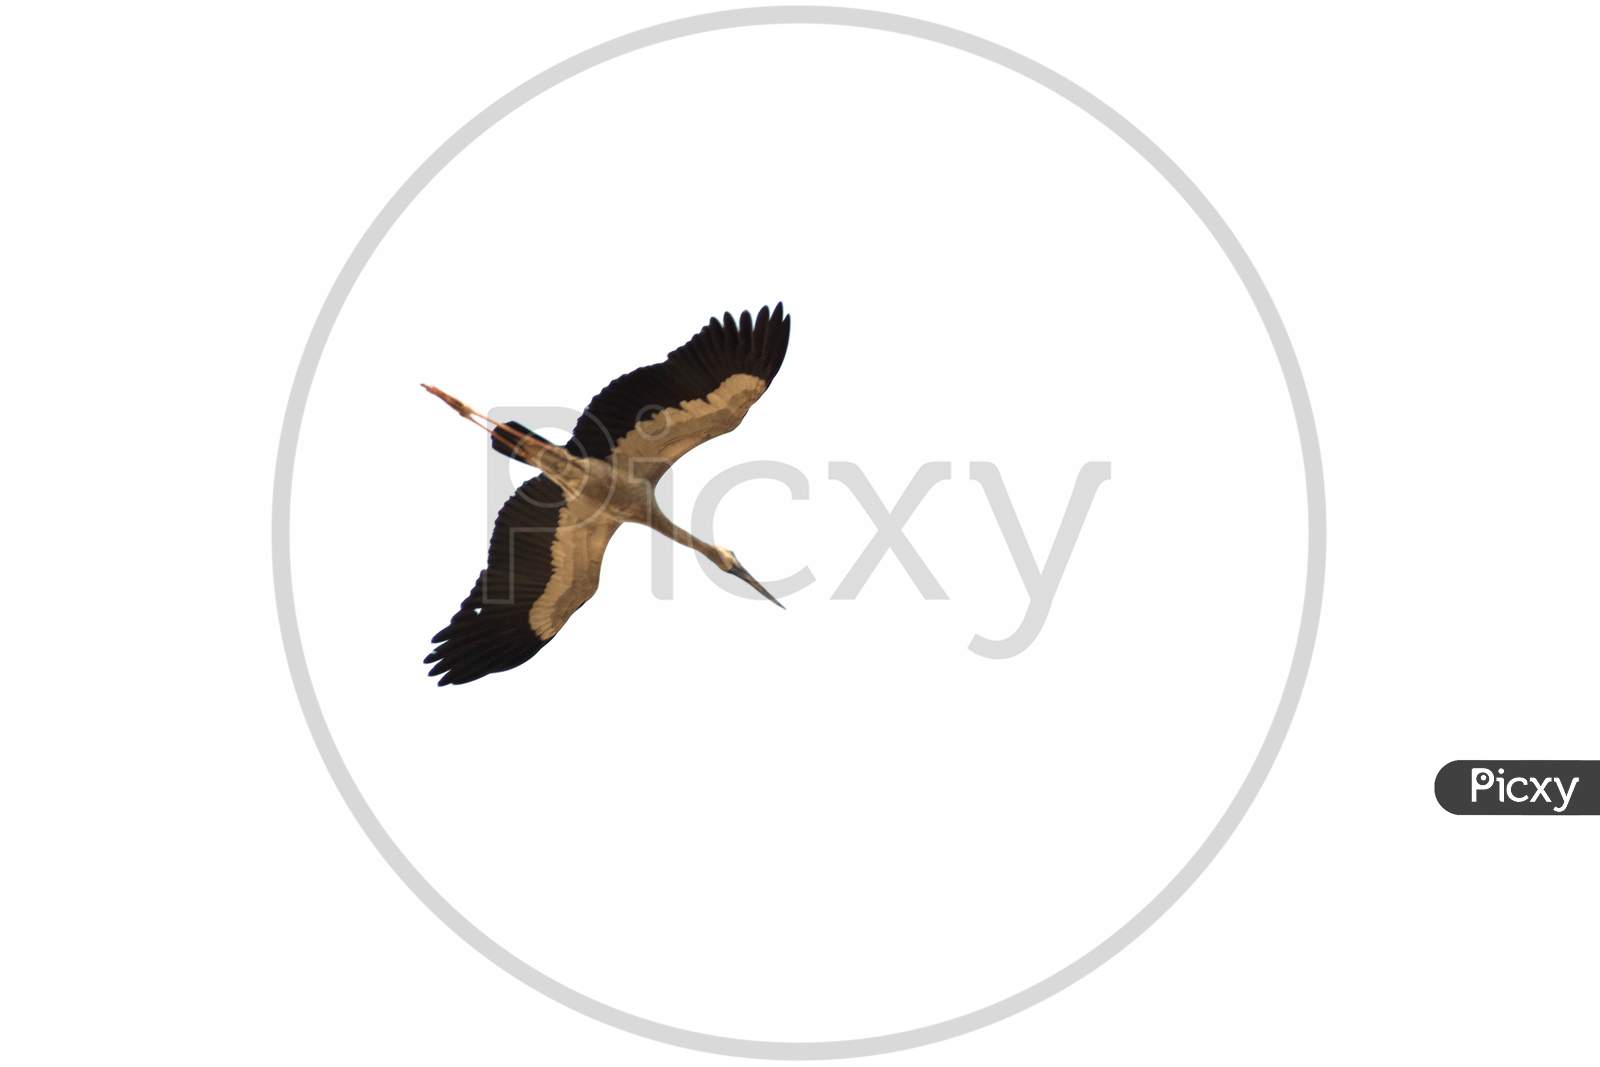 High key image of a bird in flight